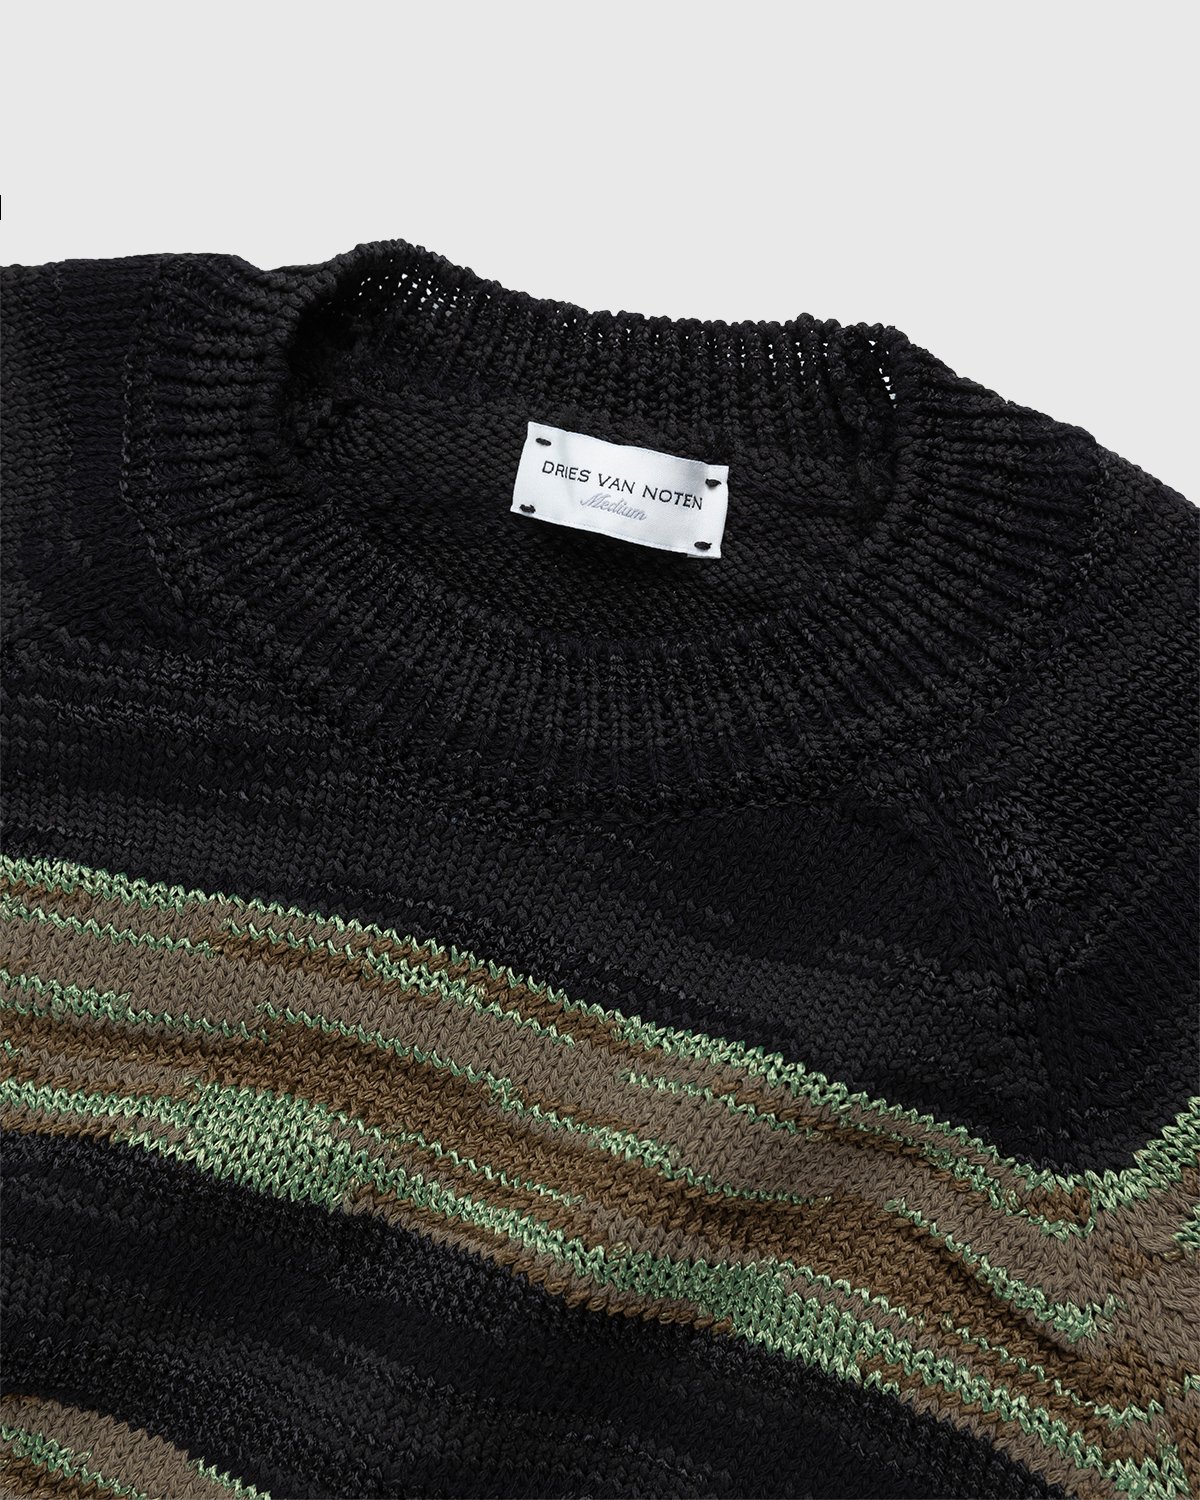 Dries van Noten - Janitor Intarsia Knit Sweater Black - Clothing - Black - Image 5